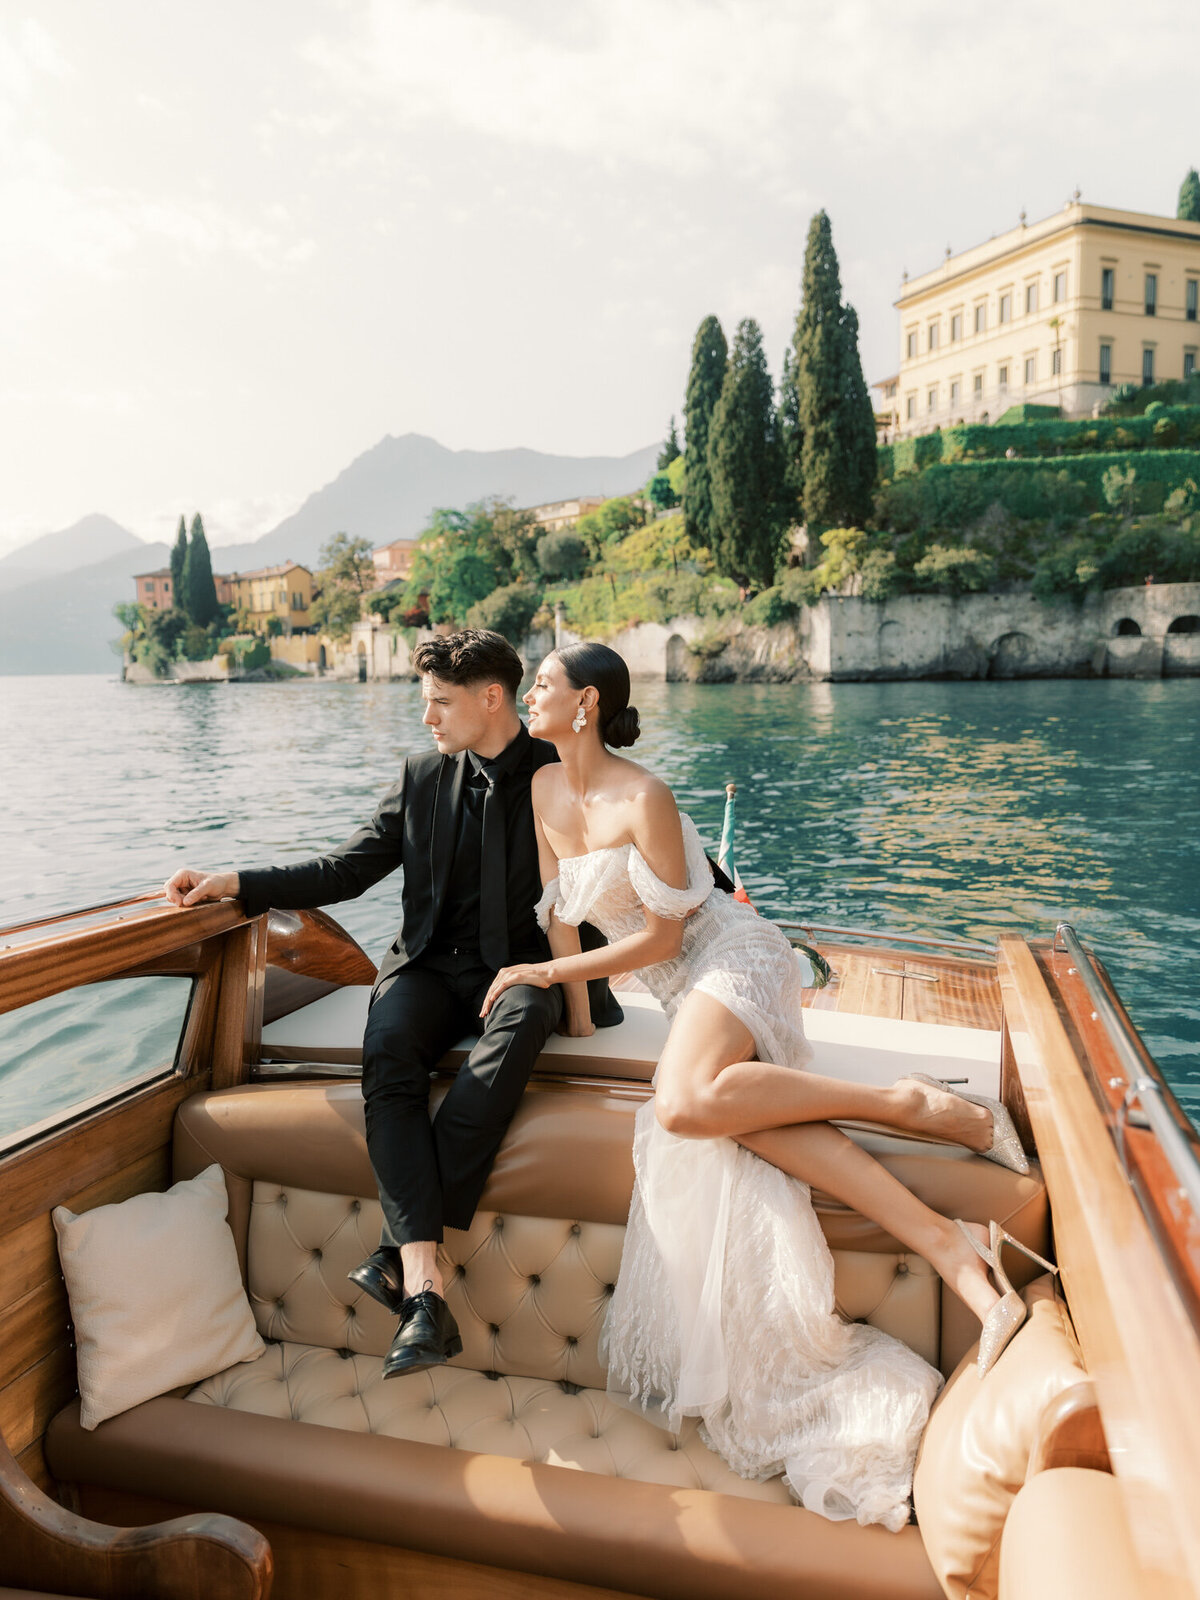 Lake Como-Boat-Villa Cipressi-Samin Photography-9